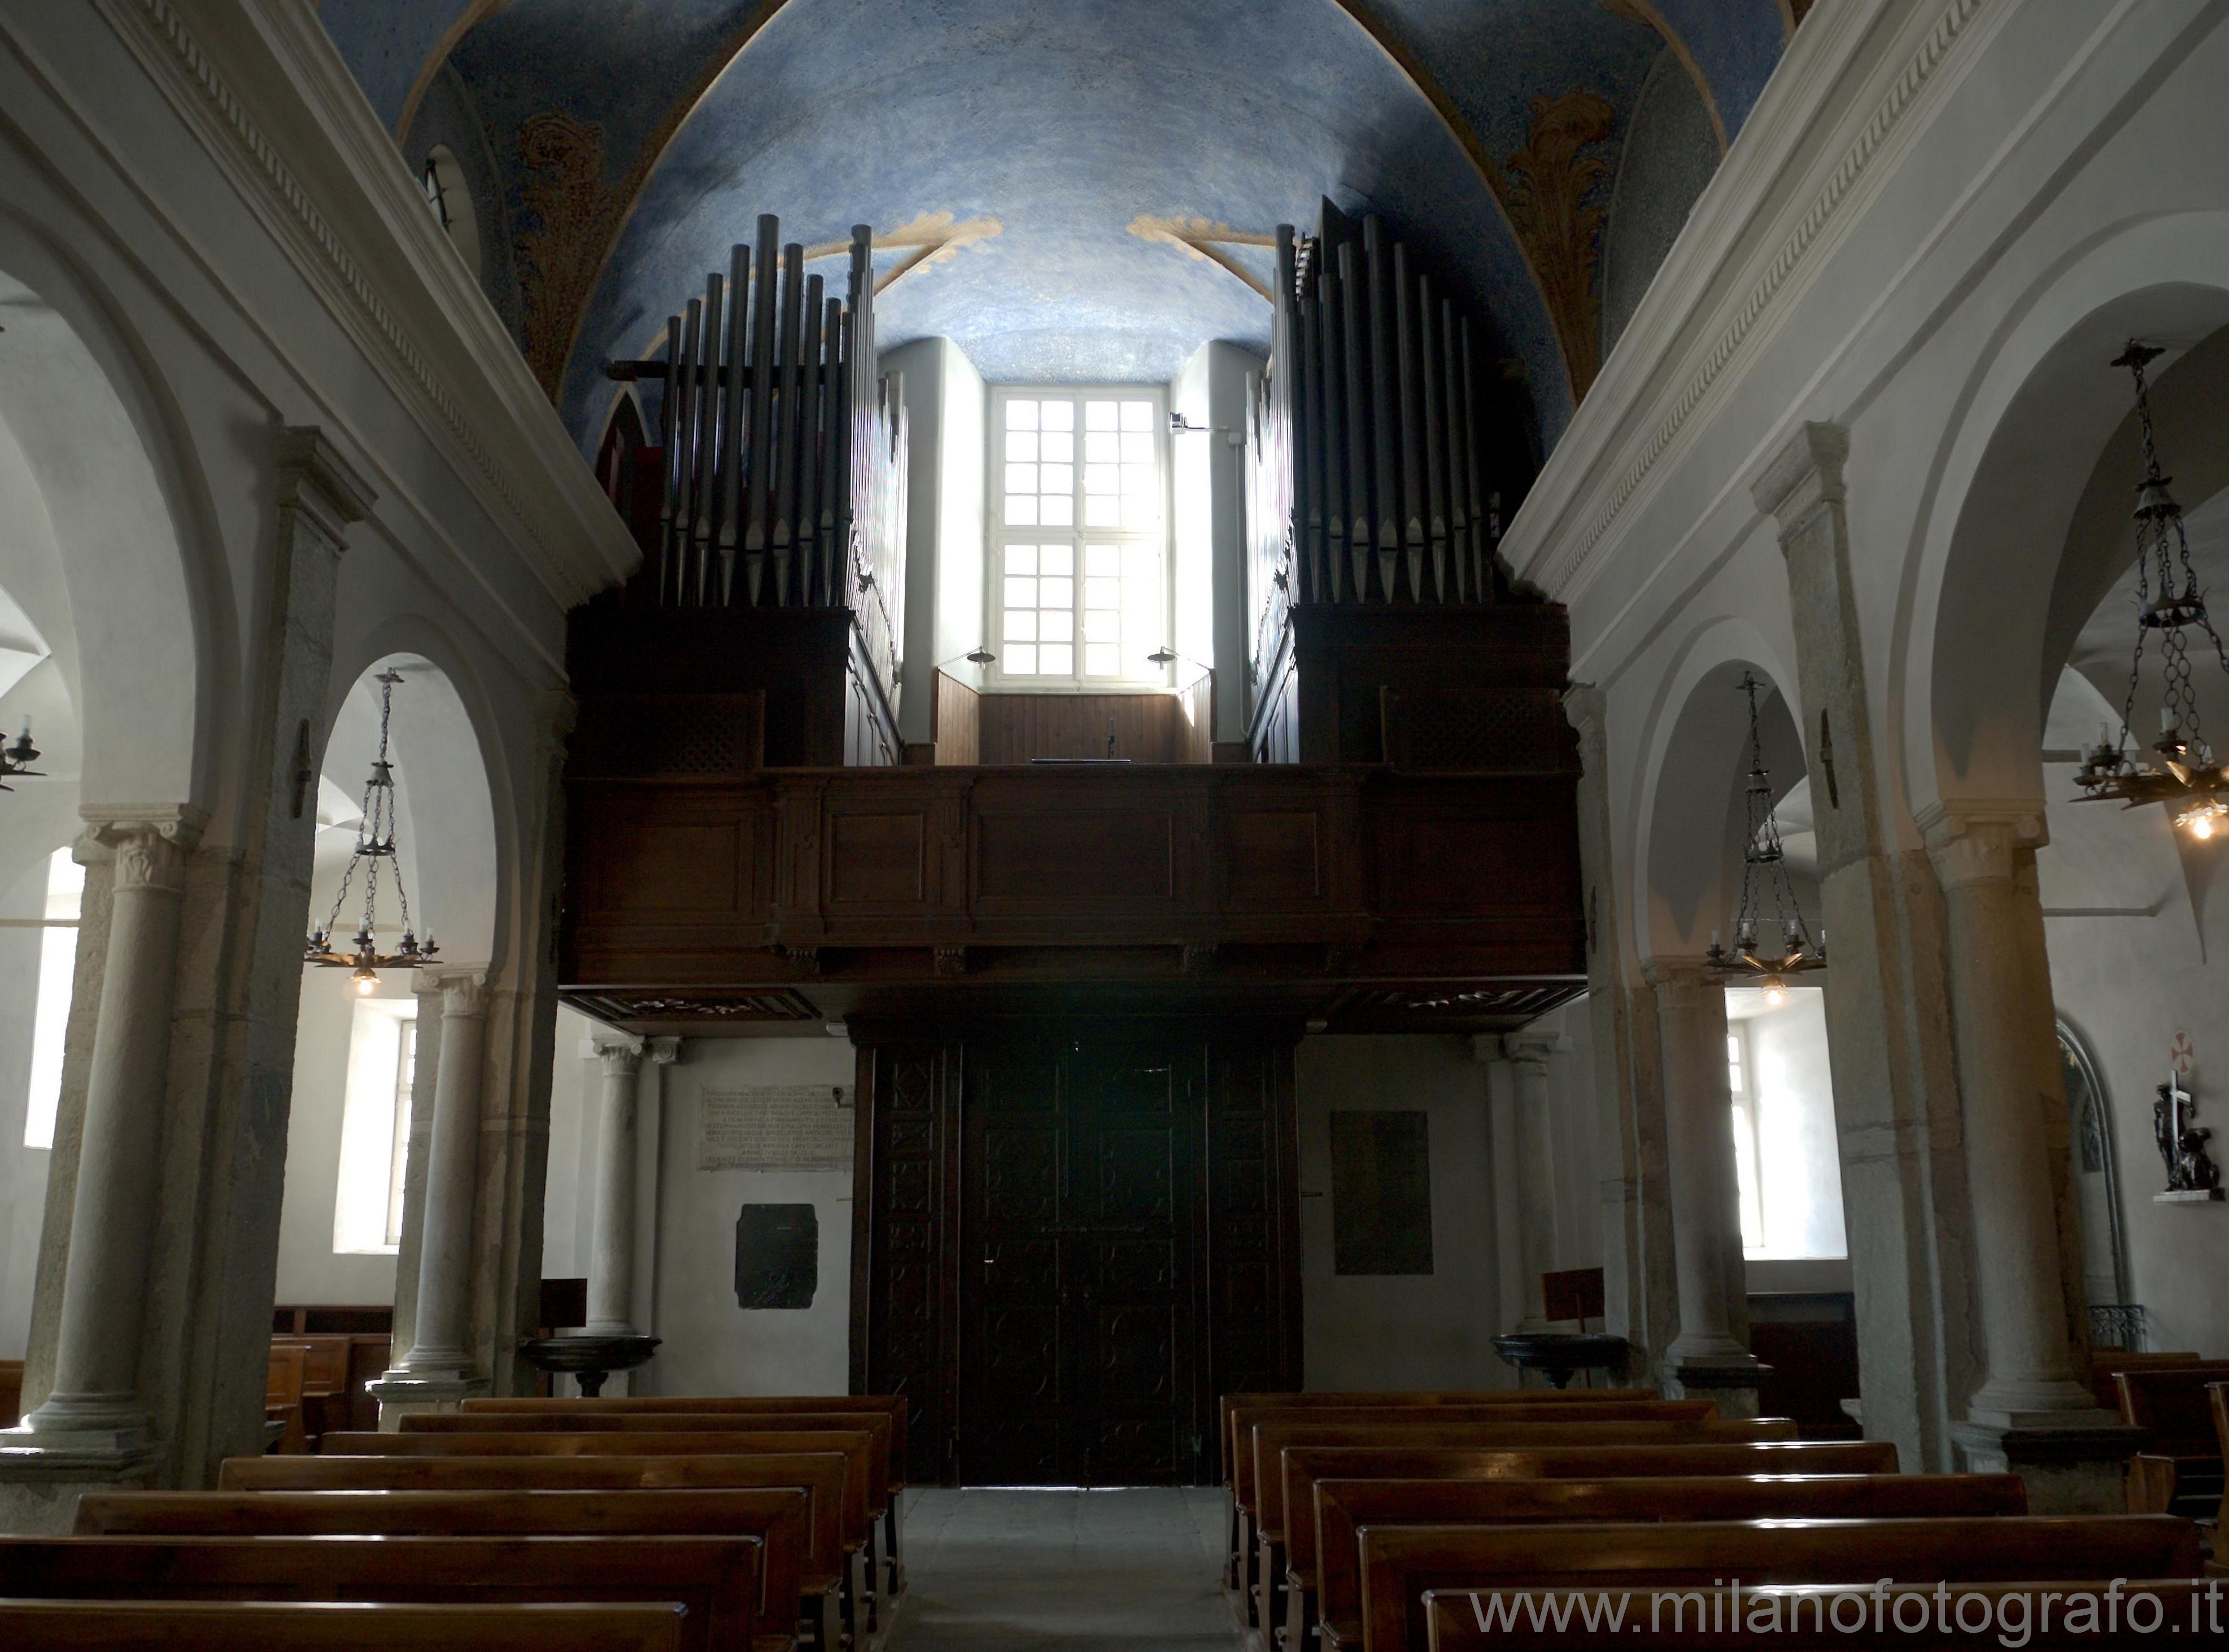 Biella, Italy: Interior of the Ancient Basilica of the Sanctuary of Oropa with the organ - Biella, Italy